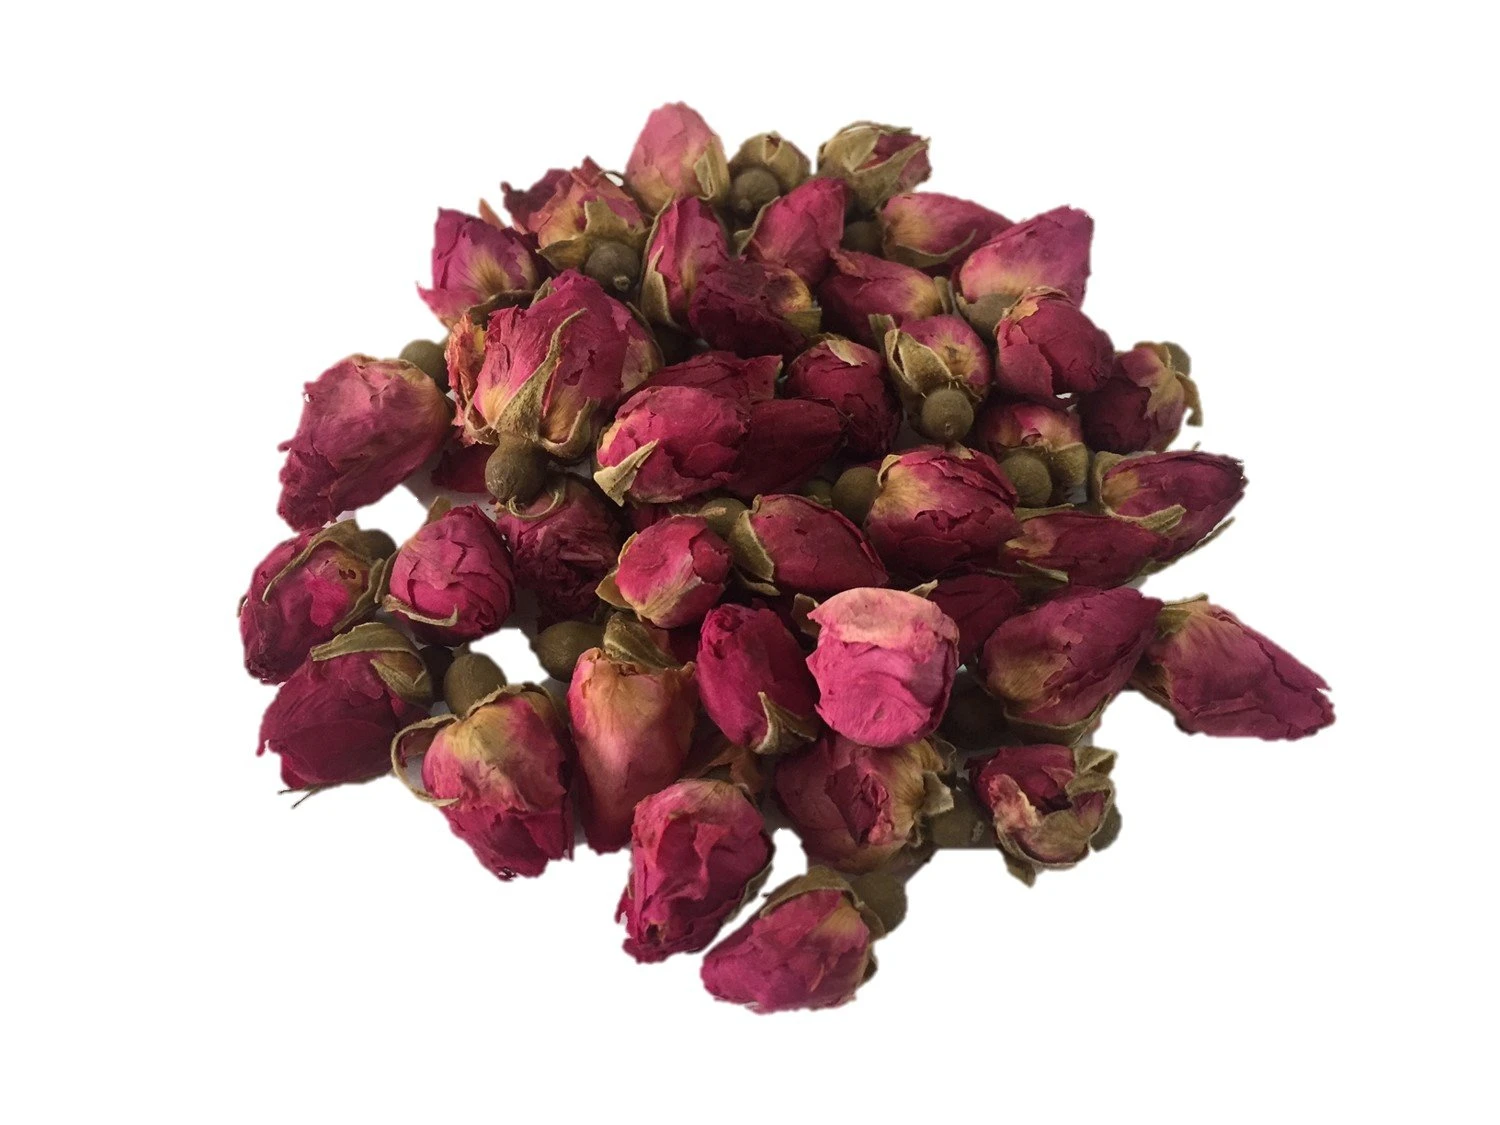 New Harvest Pink Rose Bud Tea Premium Dry Purple Rose Bud Flower for Tea Herbal Organic Edible Dried Rose Buds